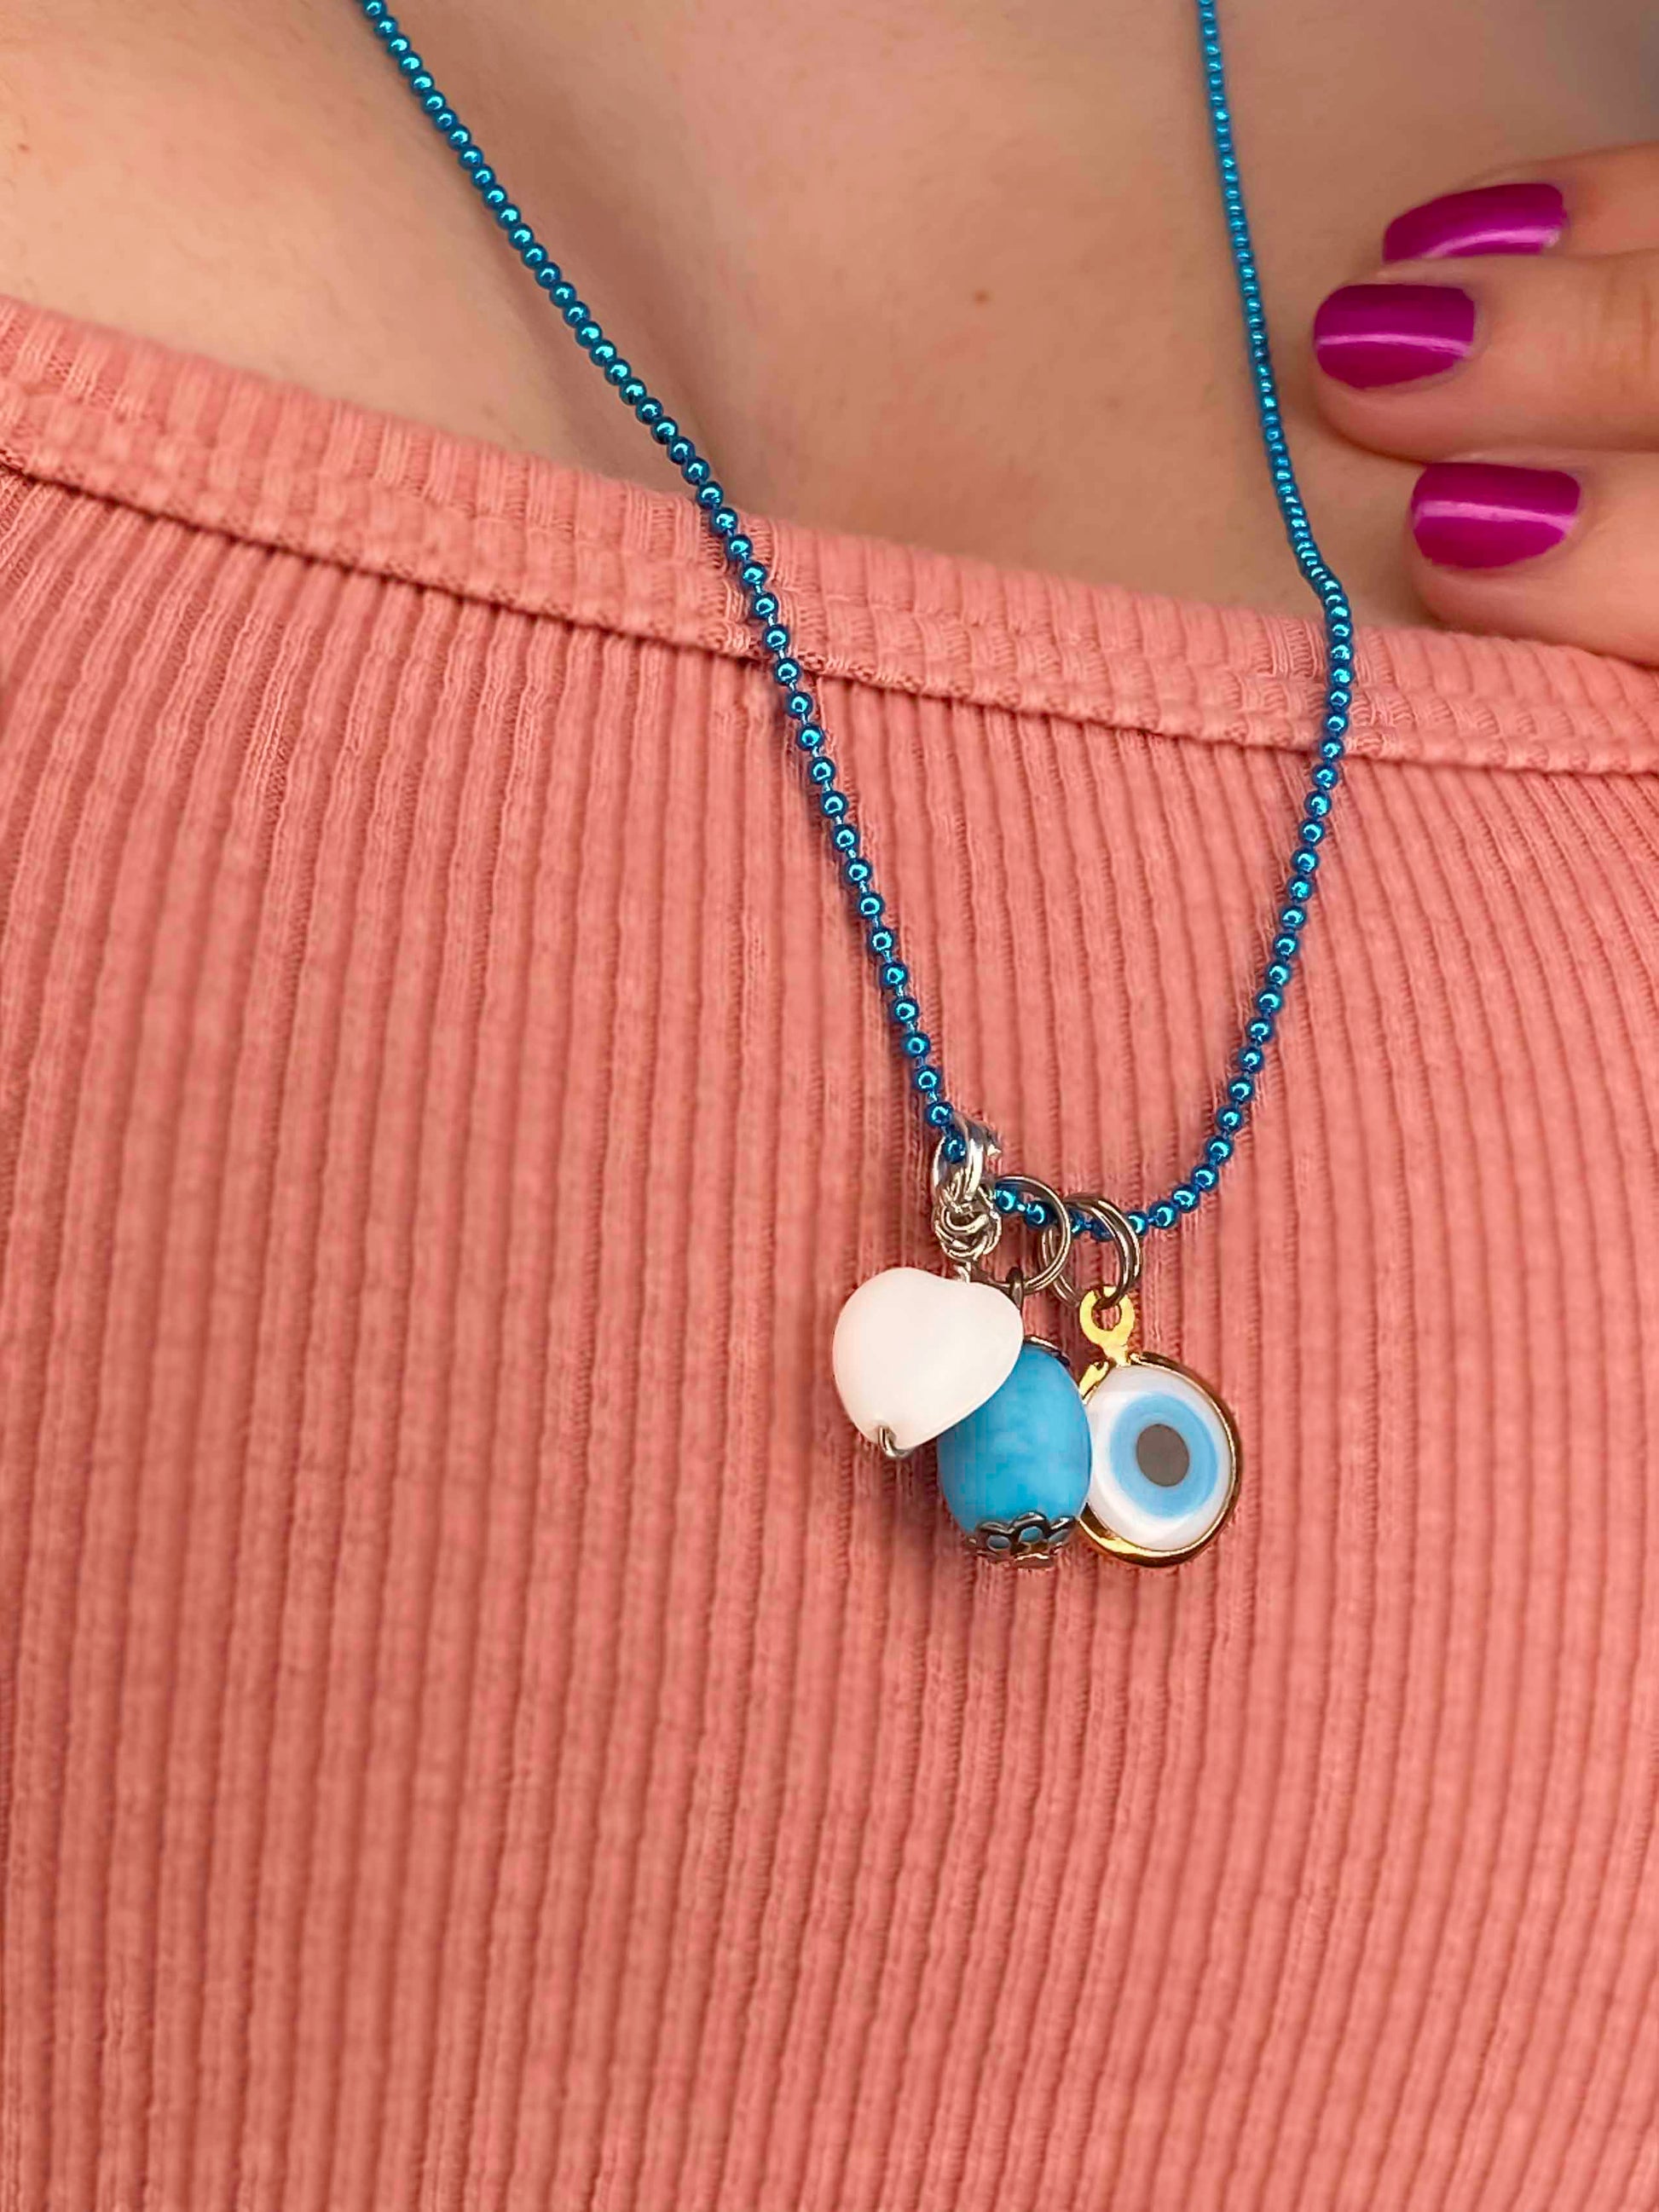 Handmade turquoise stone, evil eye, and white heart charm pendant. 